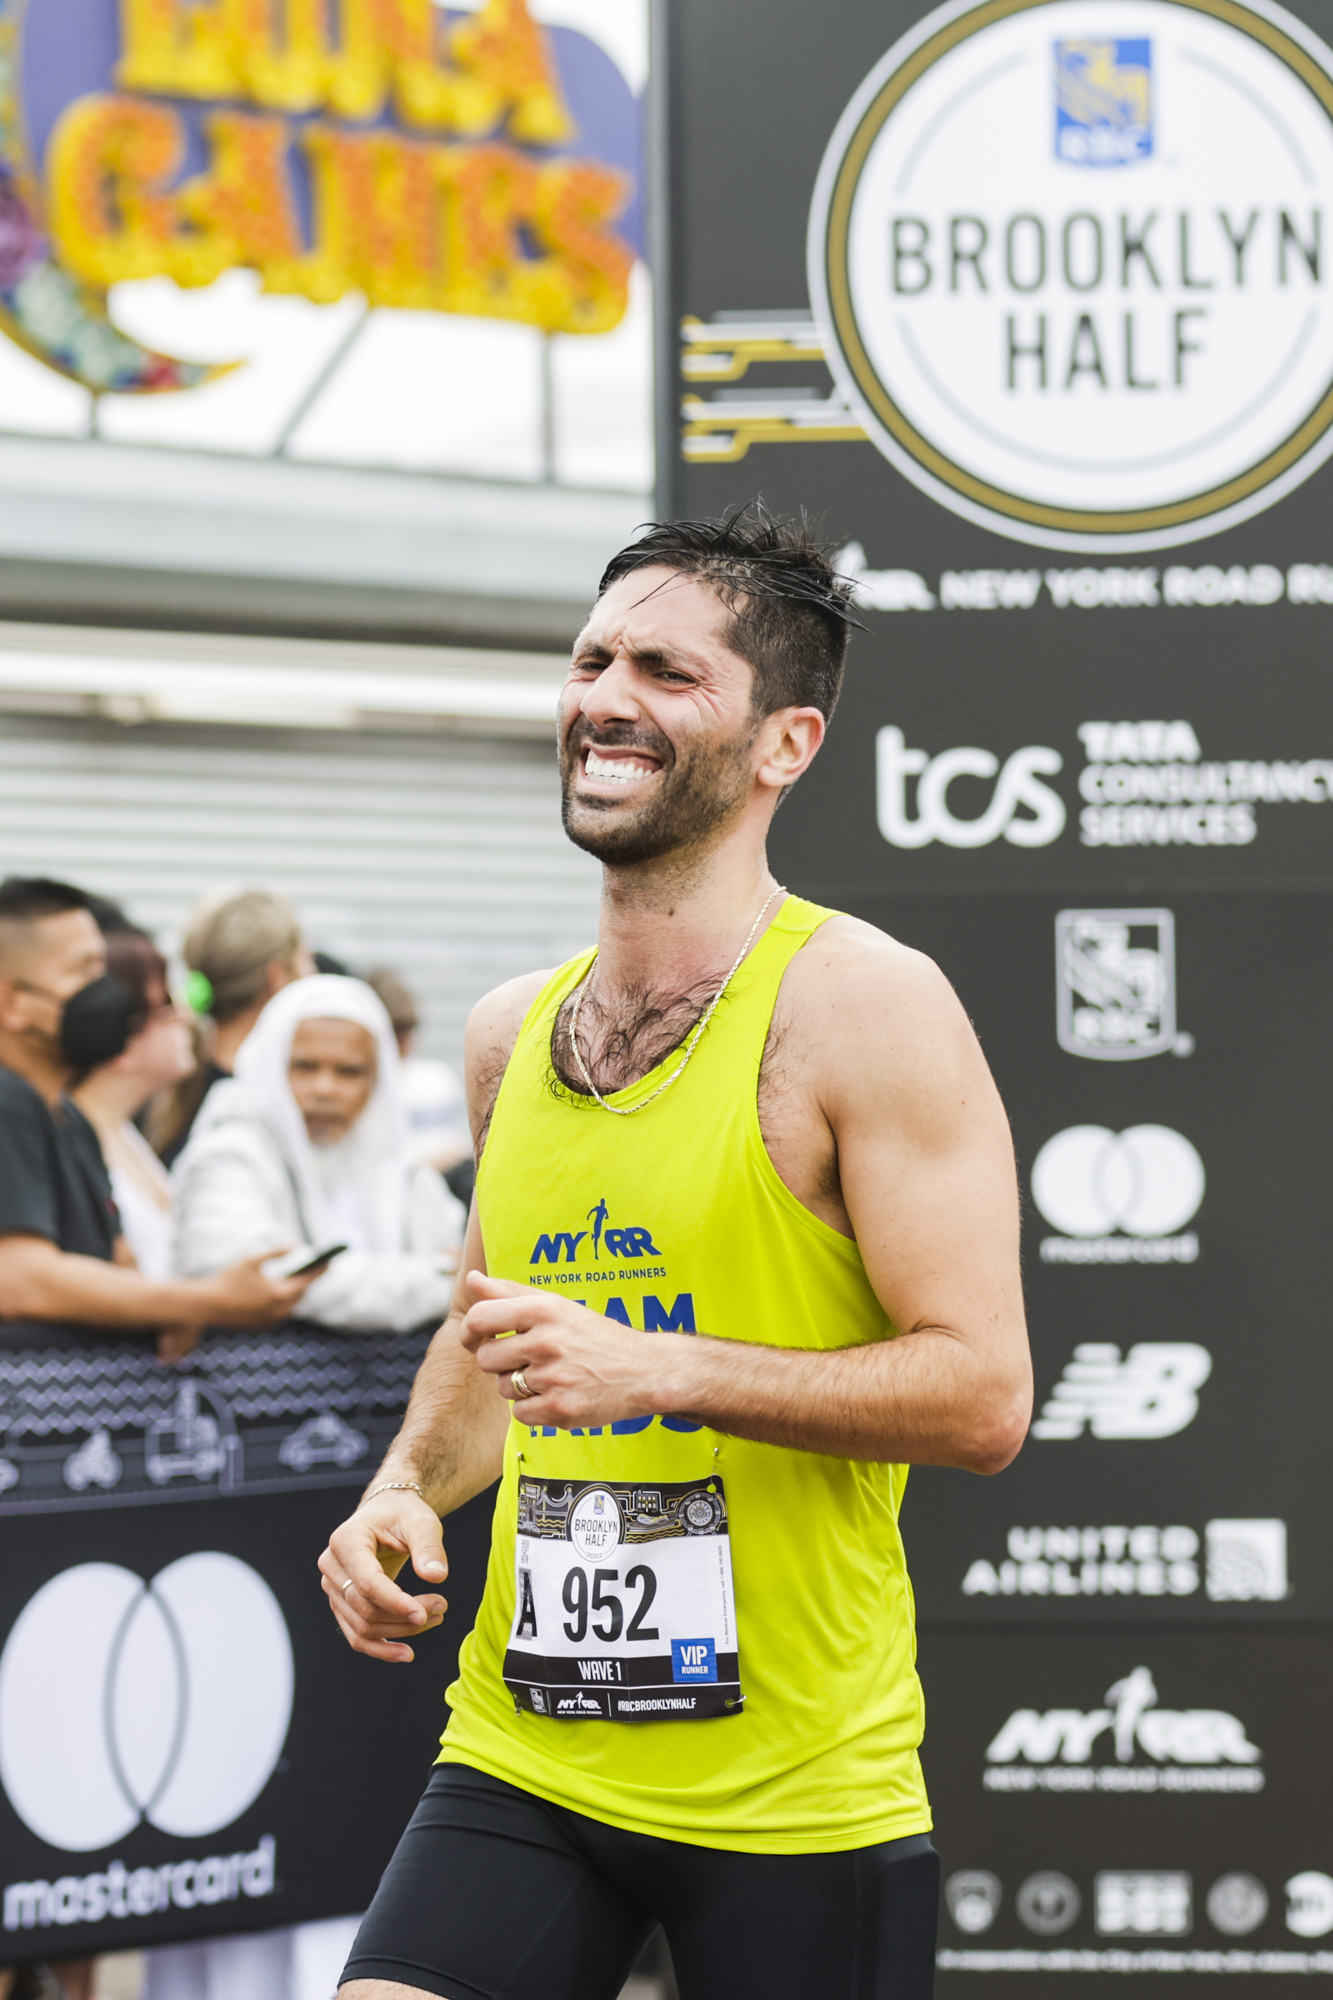 Nev Schulman looks pained while running a half marathon 